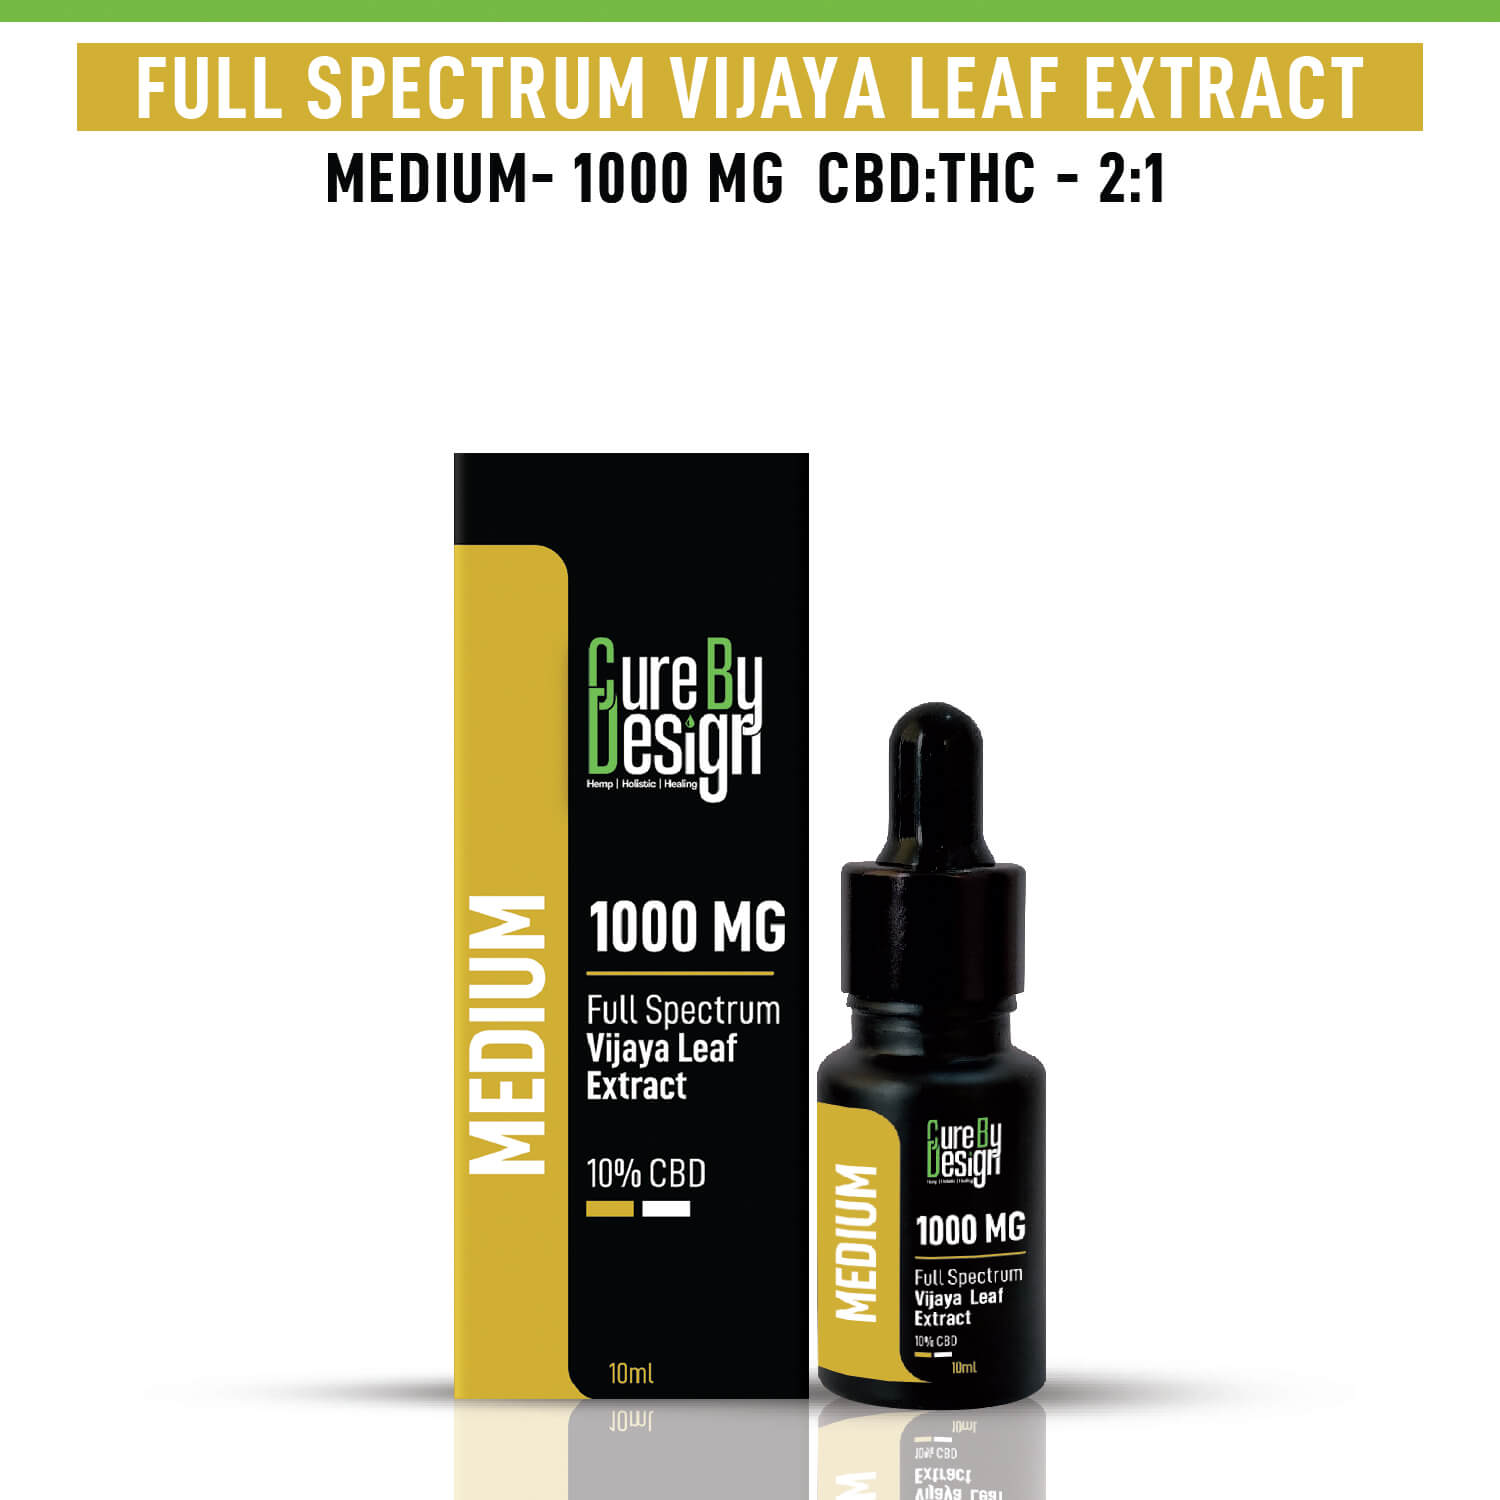 Cure By design - Full-Spectrum Vijaya Leaf Extract, 10% CBD, 1000MG (Medium) - CBD Store India